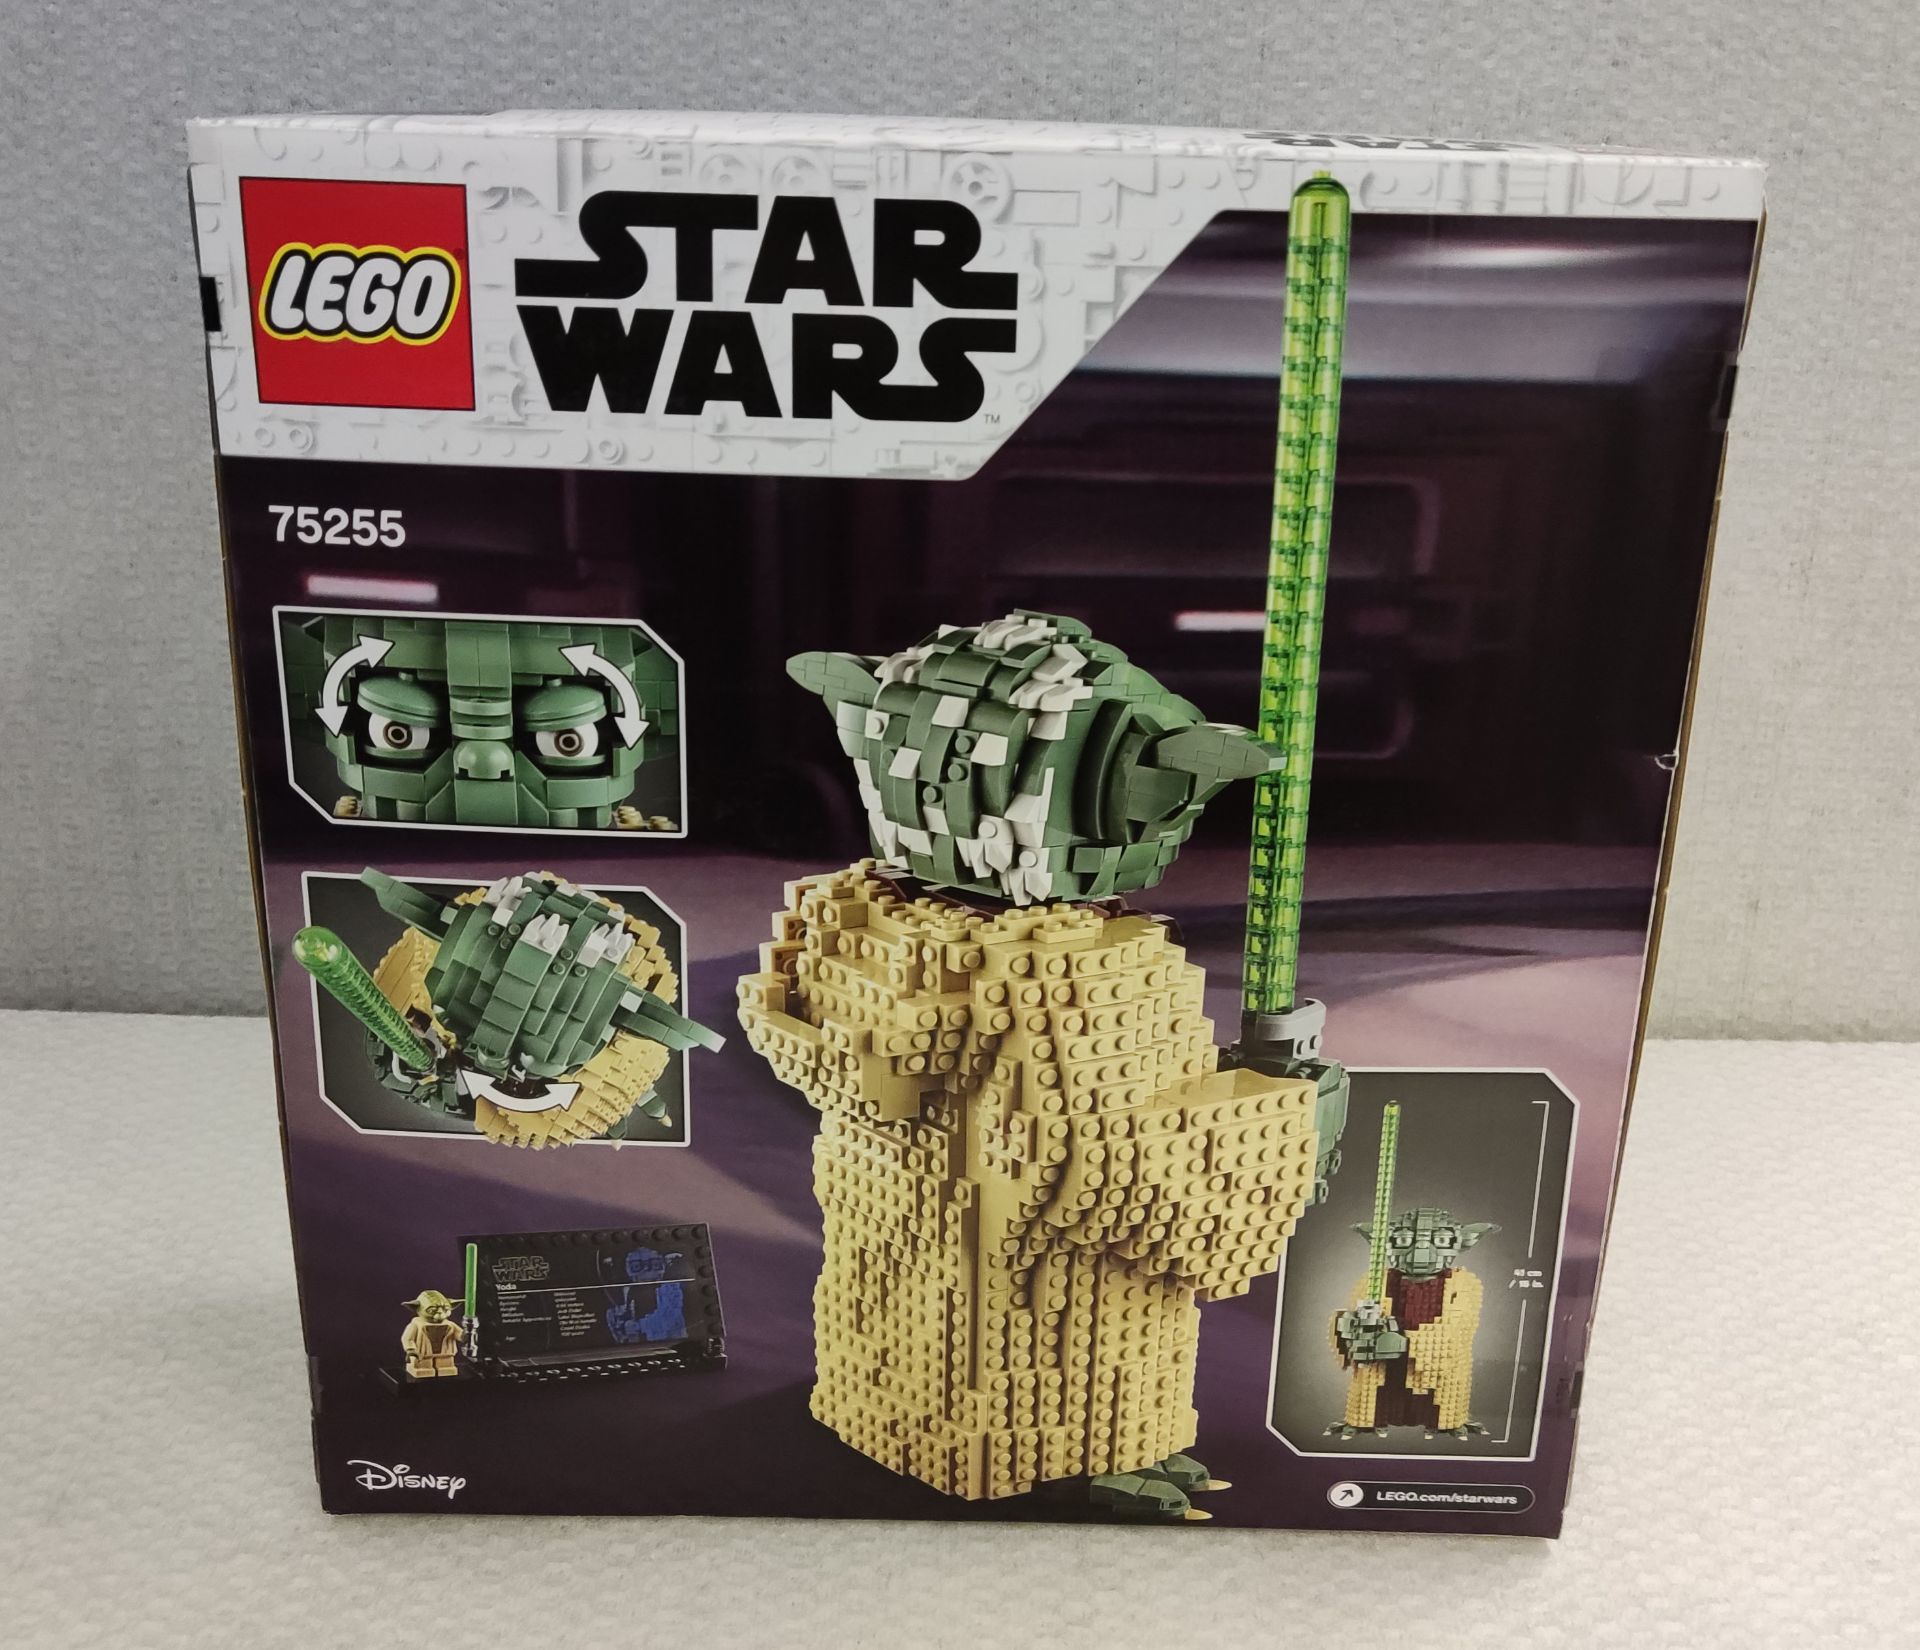 1 x Lego Star Wars Yoda - Model 75255 - New/Boxed - Image 3 of 7